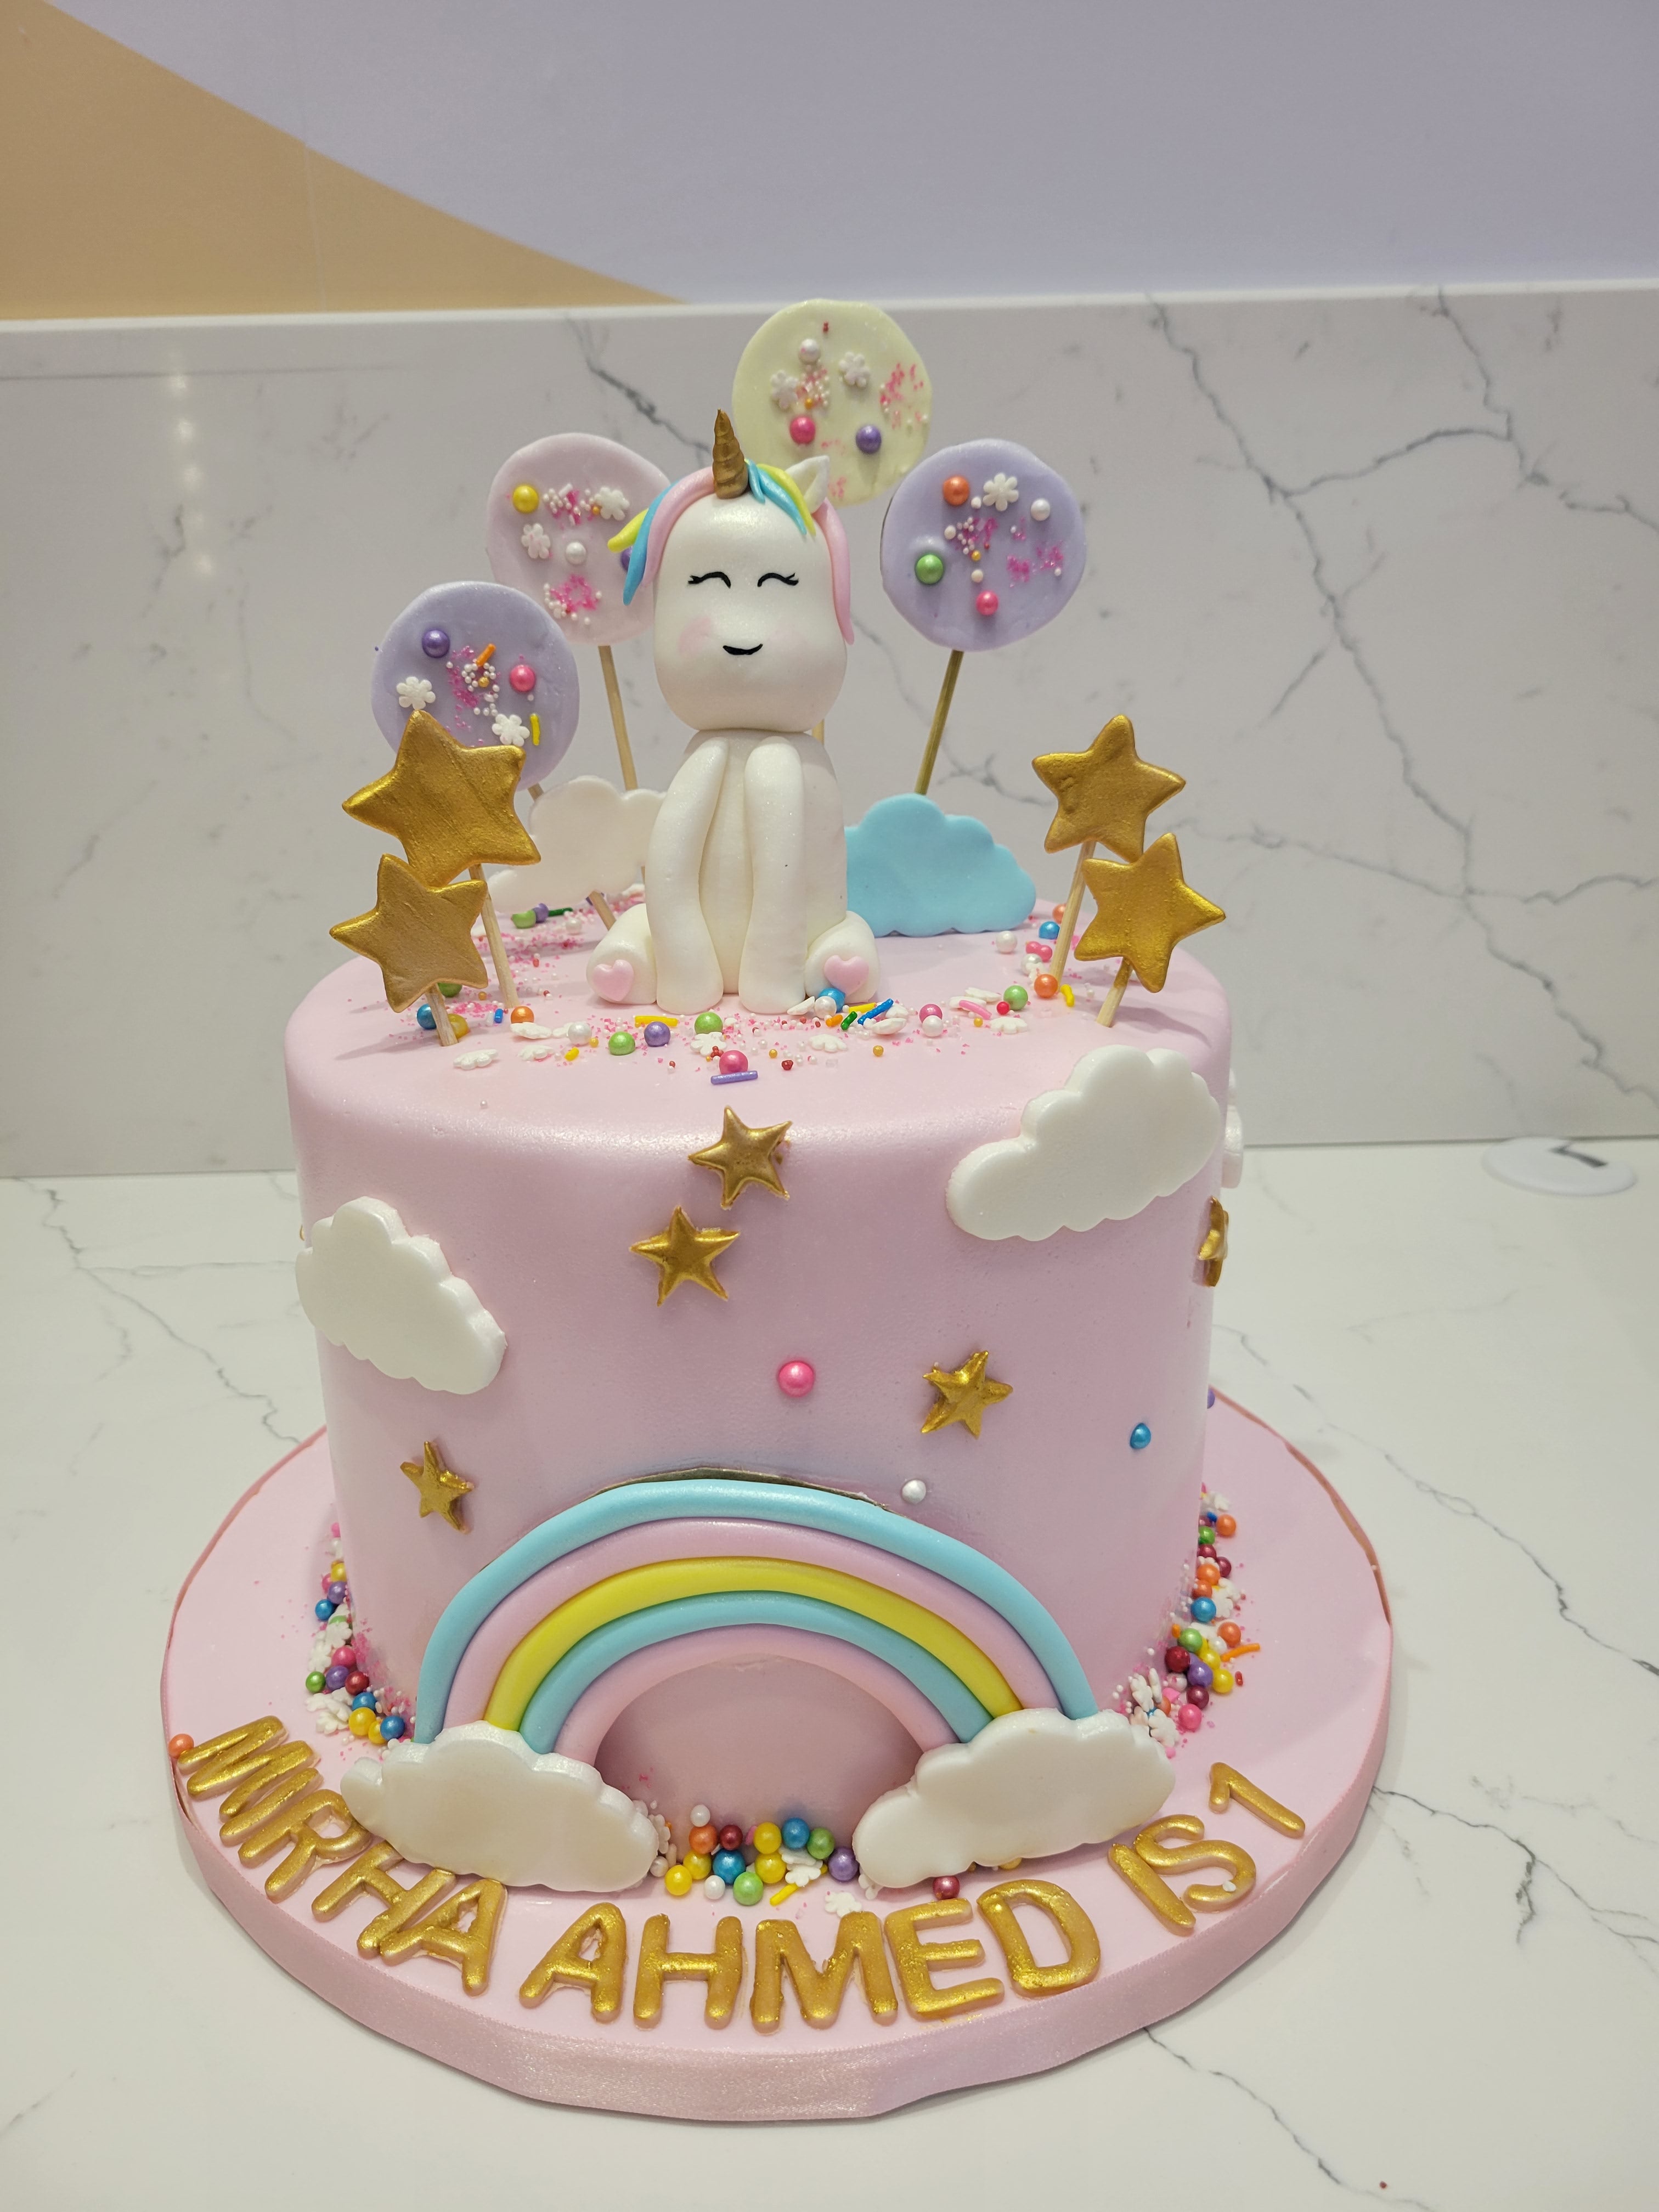 The 10 Most Magical Unicorn Cake Ideas on Pinterest | Unicorn birthday cake,  Cool birthday cakes, Cake